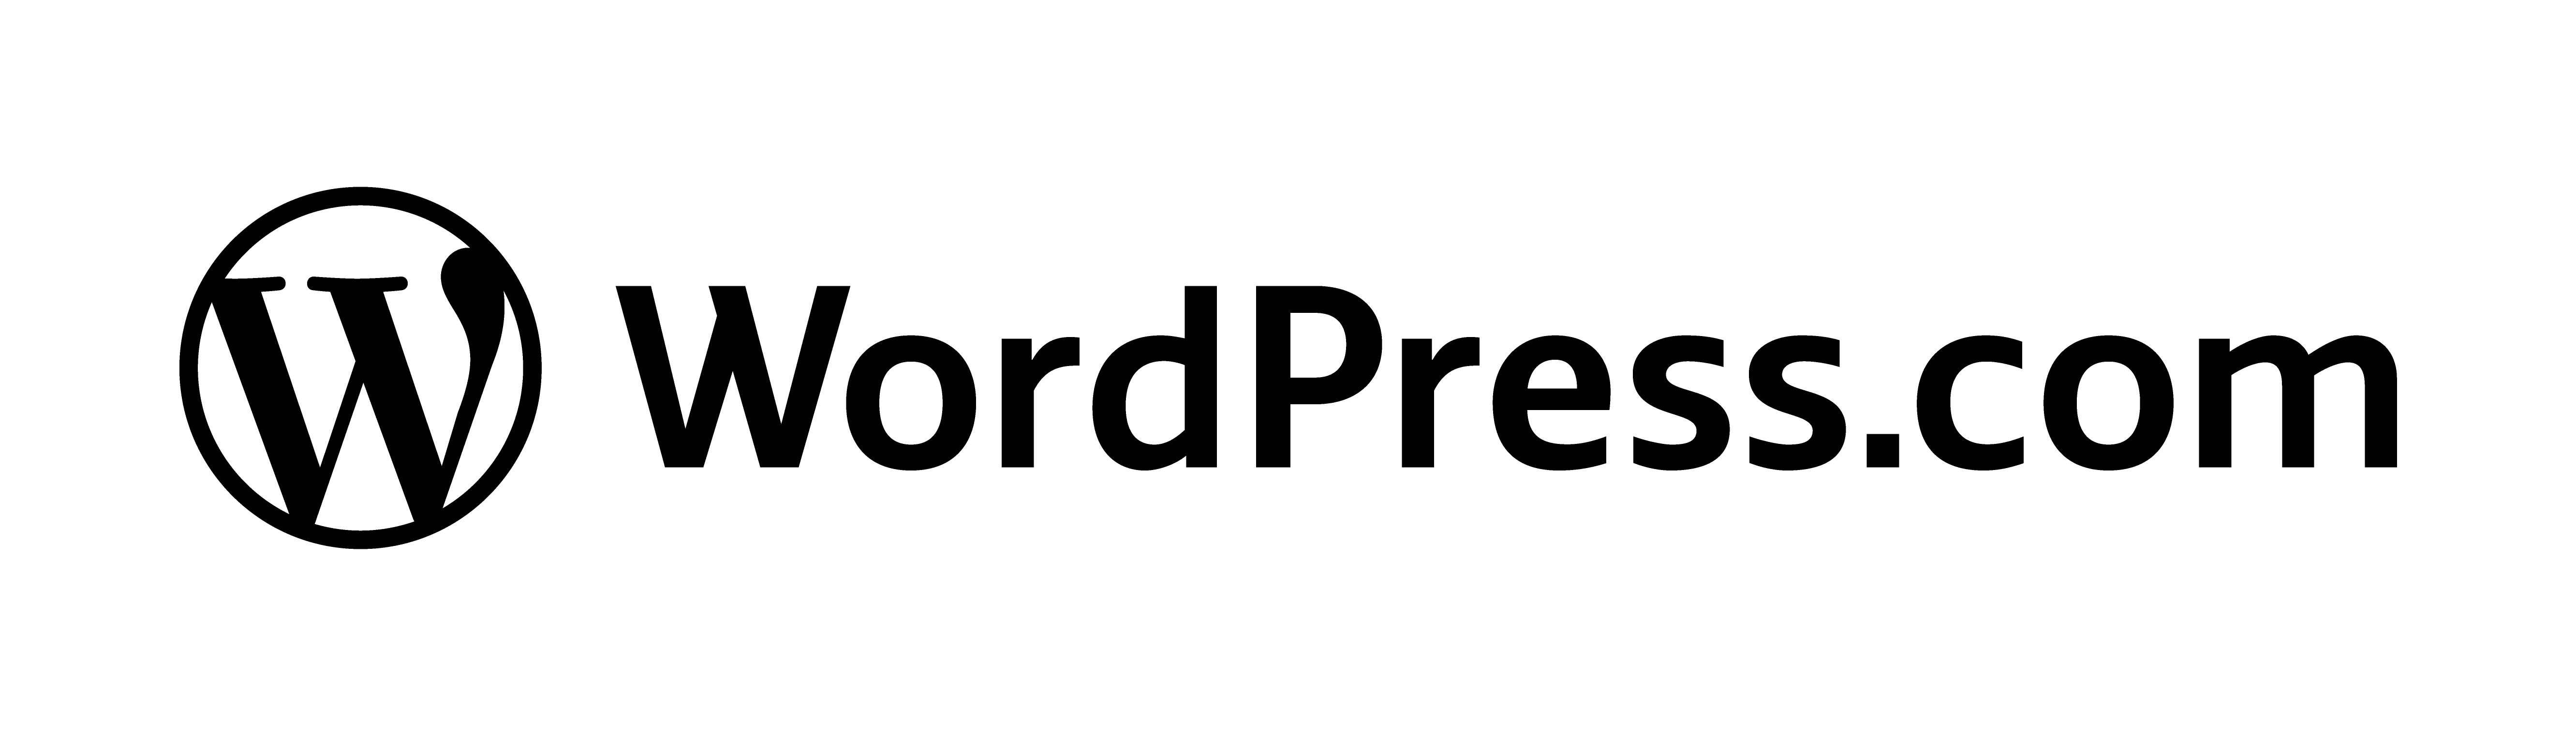 Wordpress.com Logo - Brand Materials — Automattic